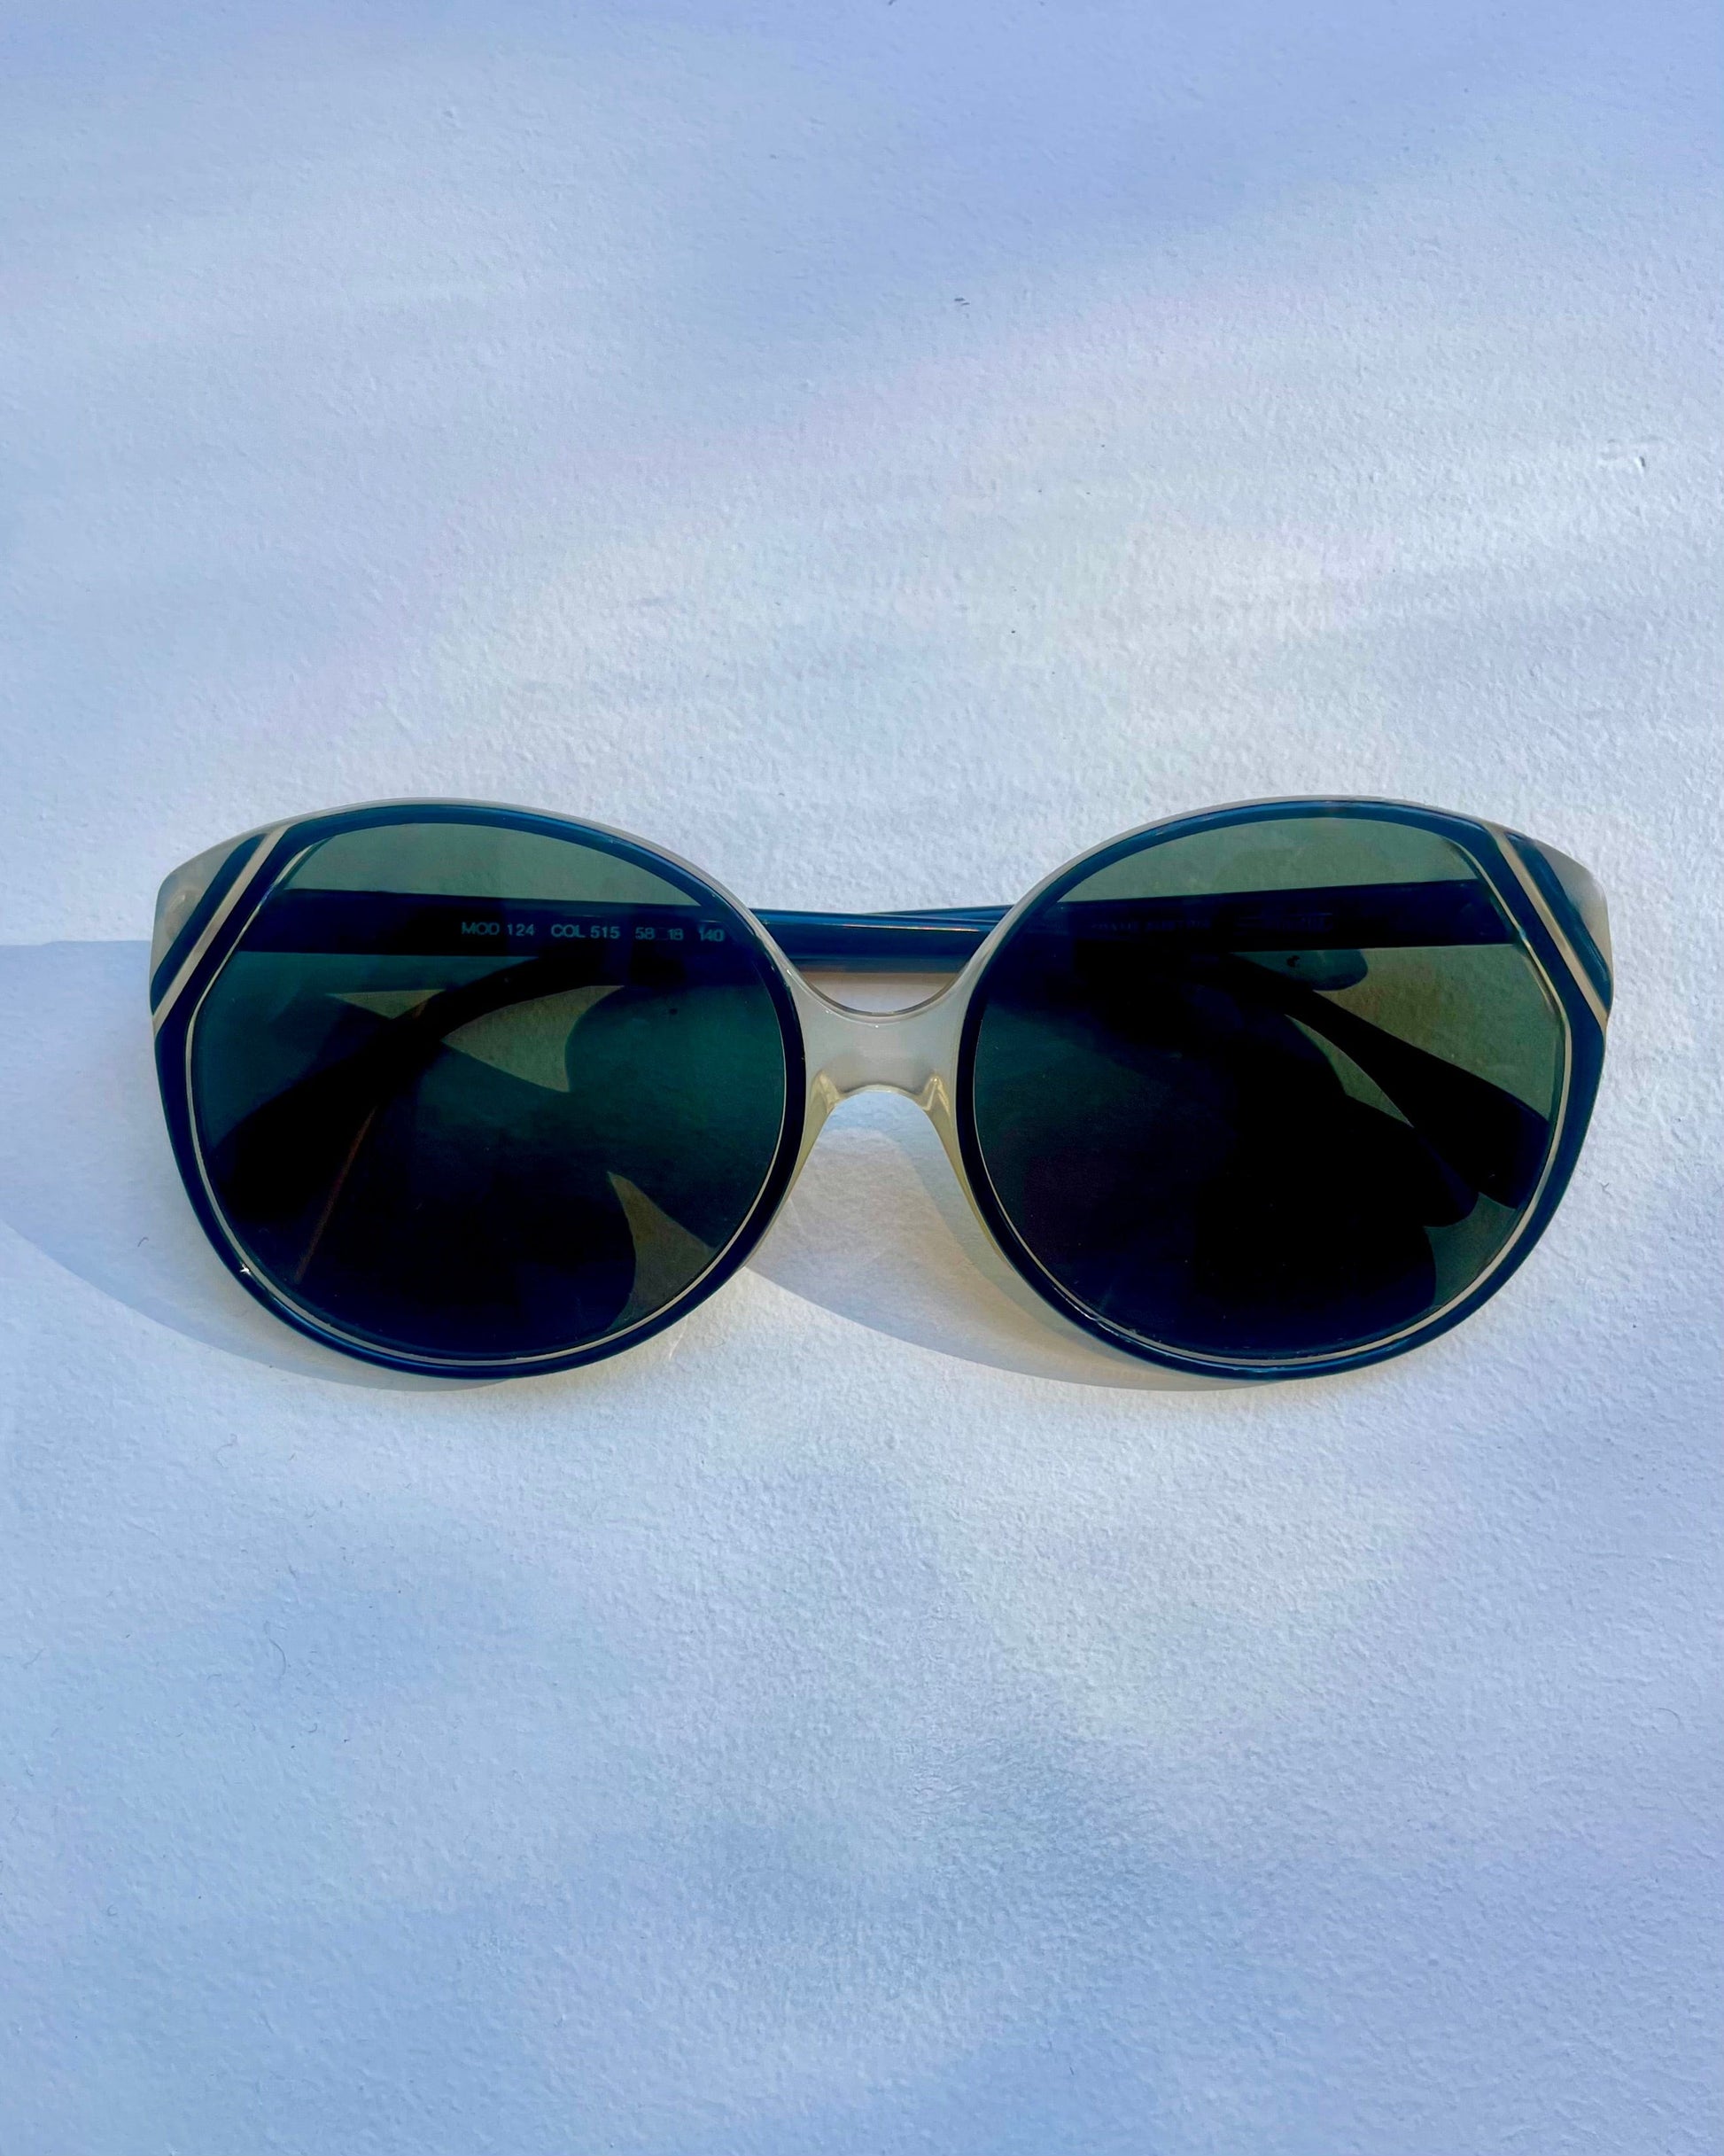 Black/Clear Silhouette 80s Vintage Sunglasses Accessories Vintage Shades   